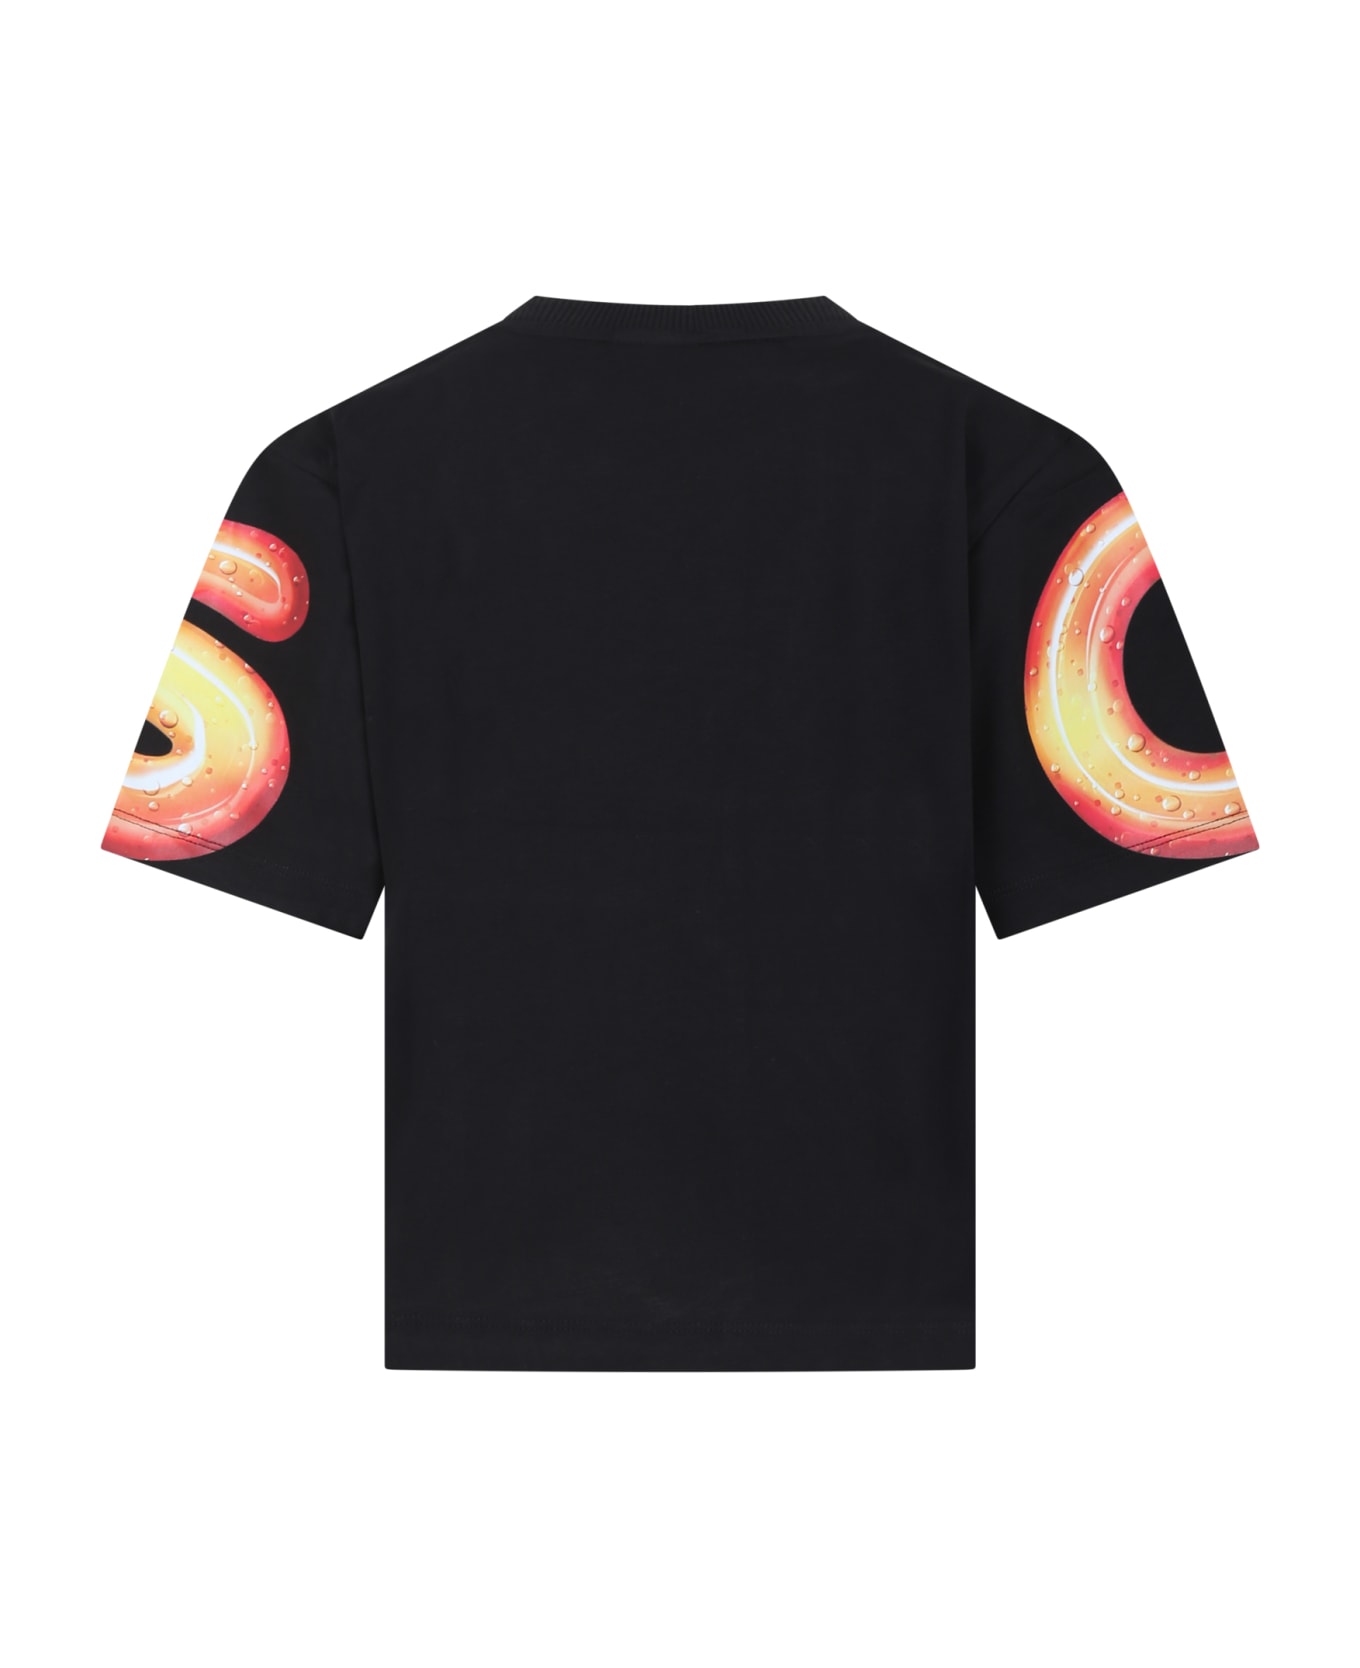 GCDS Mini Black T-shirt For Kids With Logo - Black